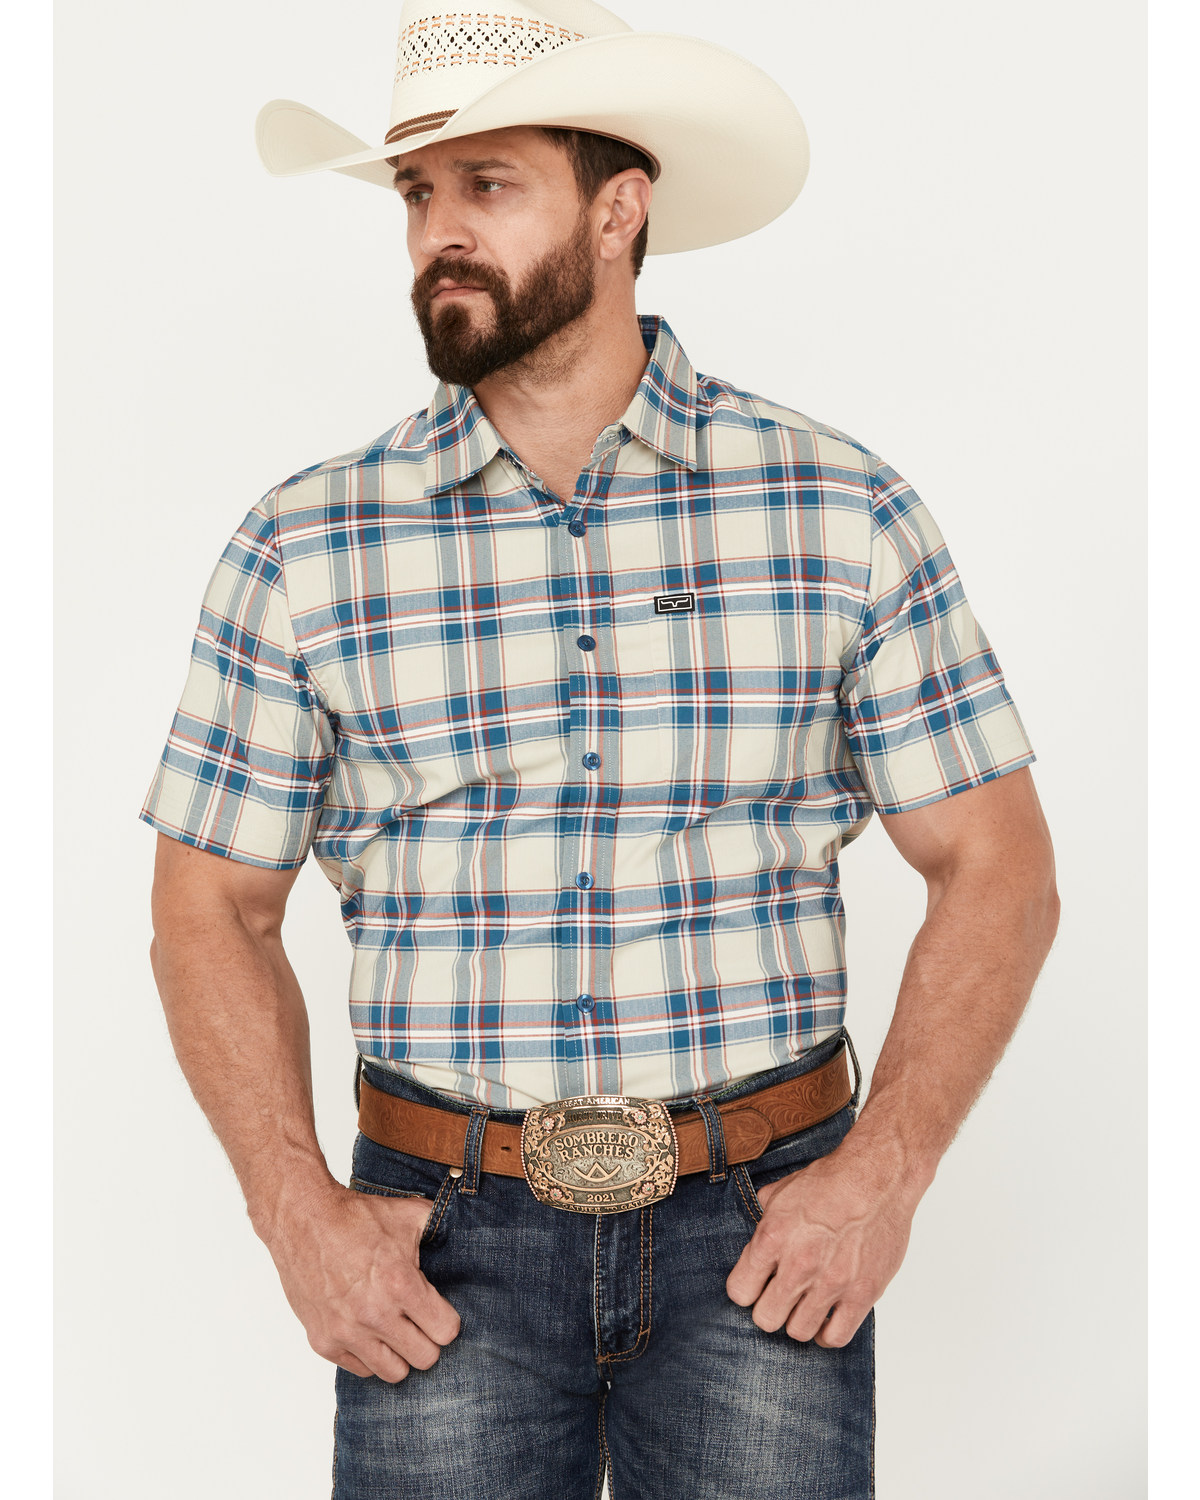 Kimes Ranch Men's Four Stroke Plaid Print Short Sleeve Button Down Shirt